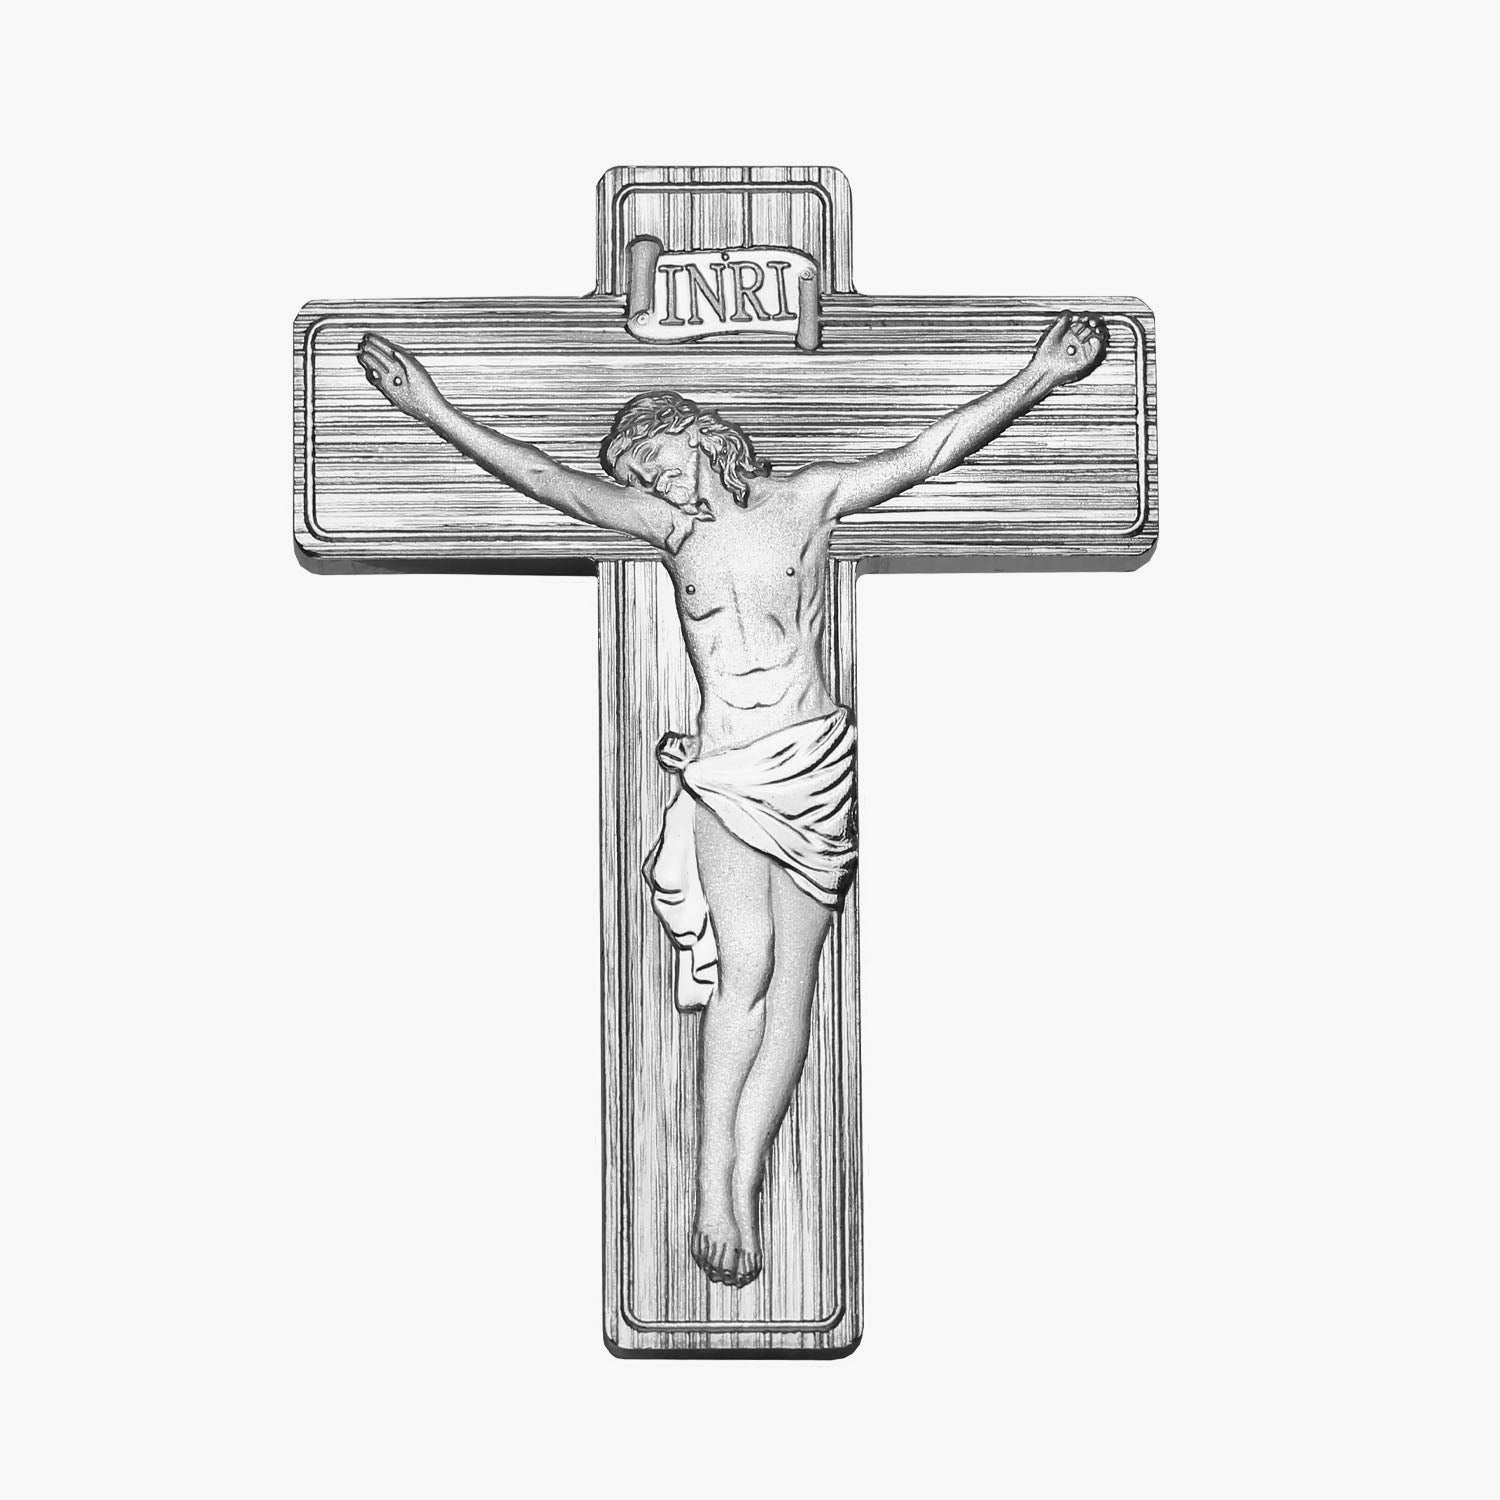 Crucifix 1oz Solid Silver Coin